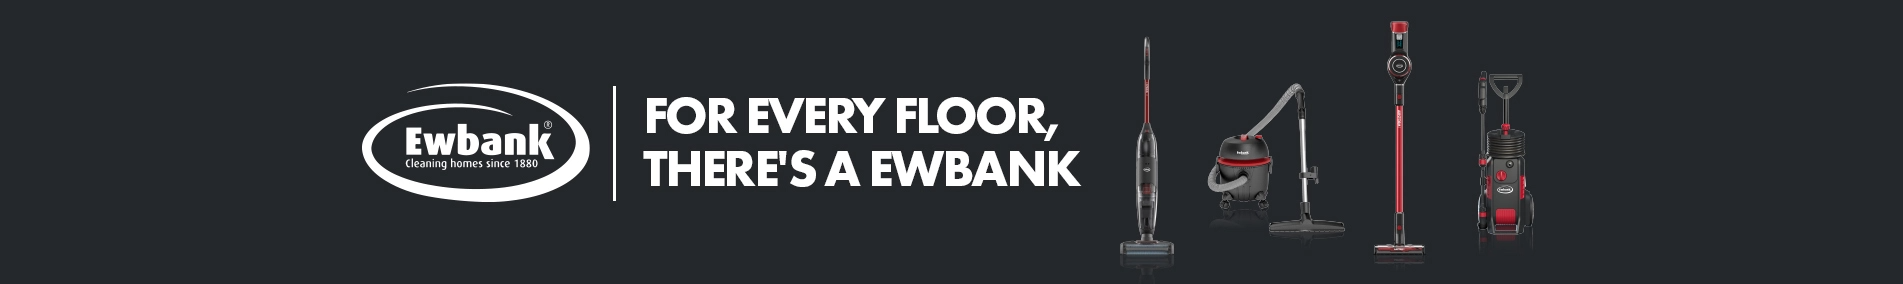 ewbank banner